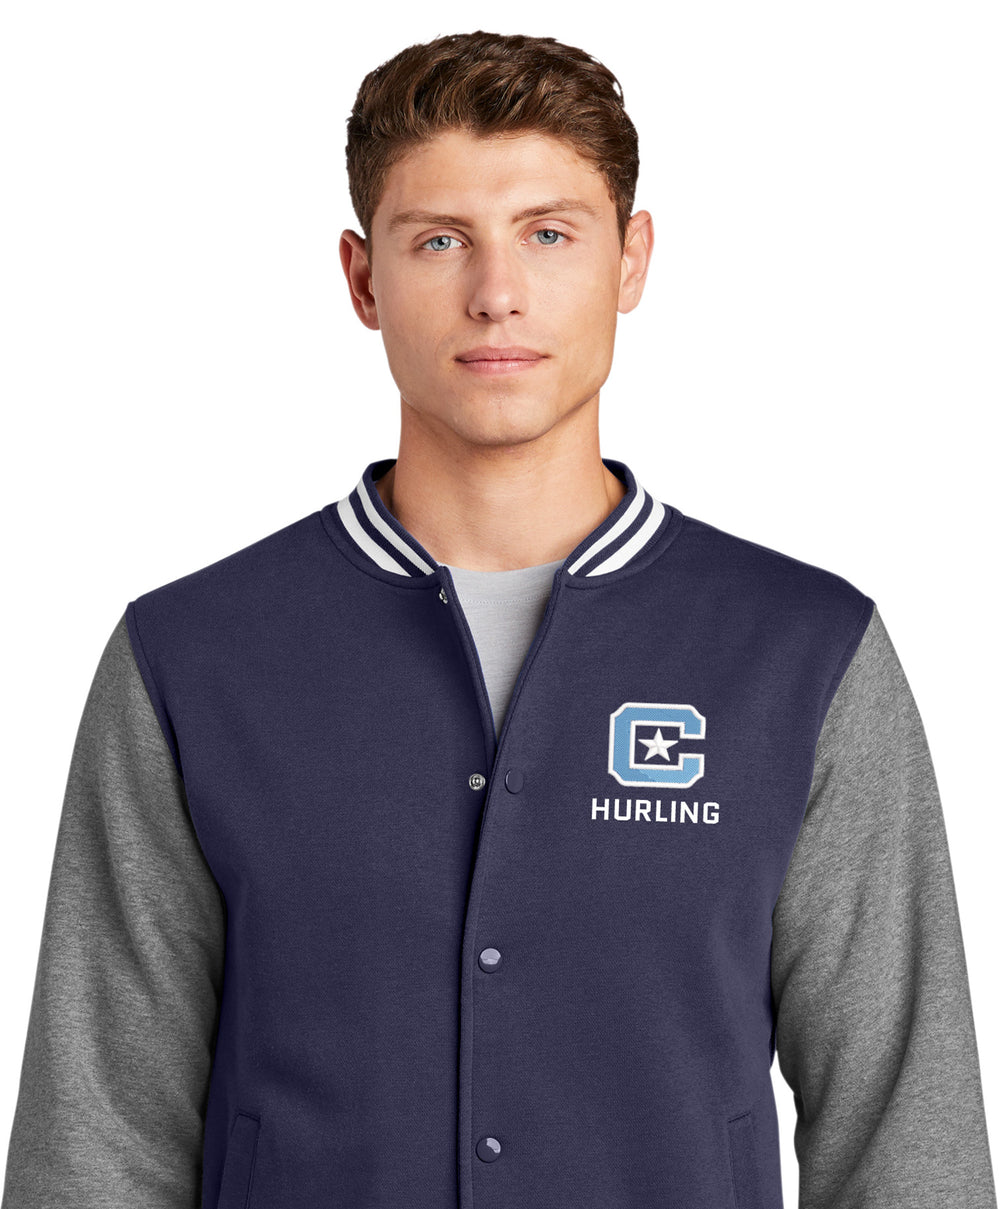 The Citadel C, Club Sports - Hurling, Fleece Letterman Jacket